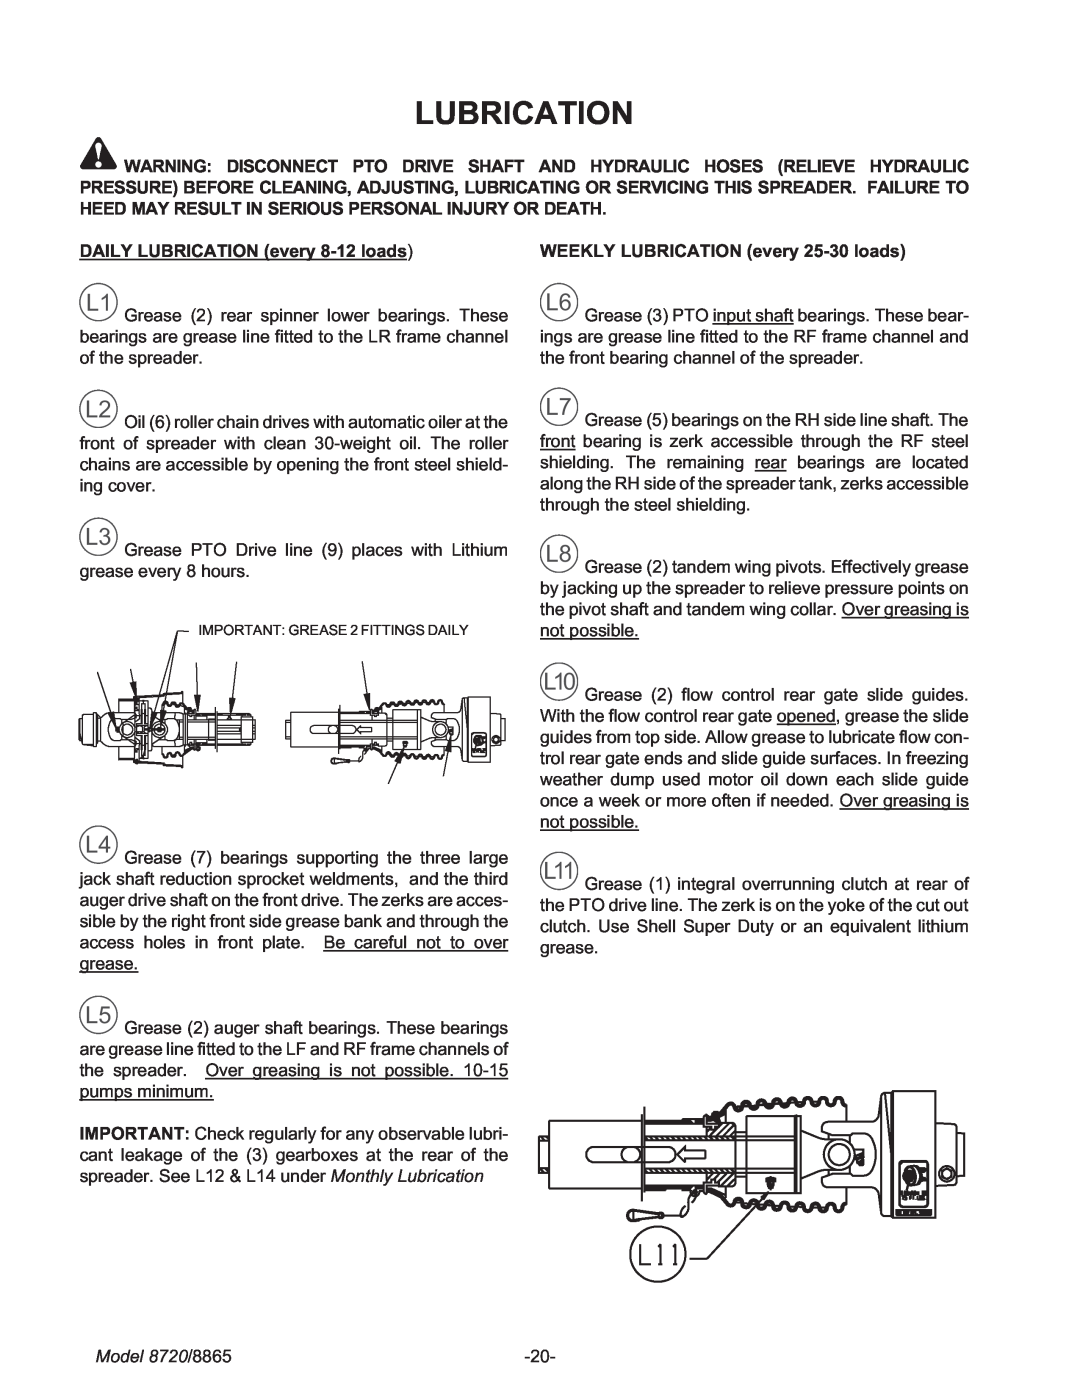 Meyer manual Lubrication, Model 8720/8865 